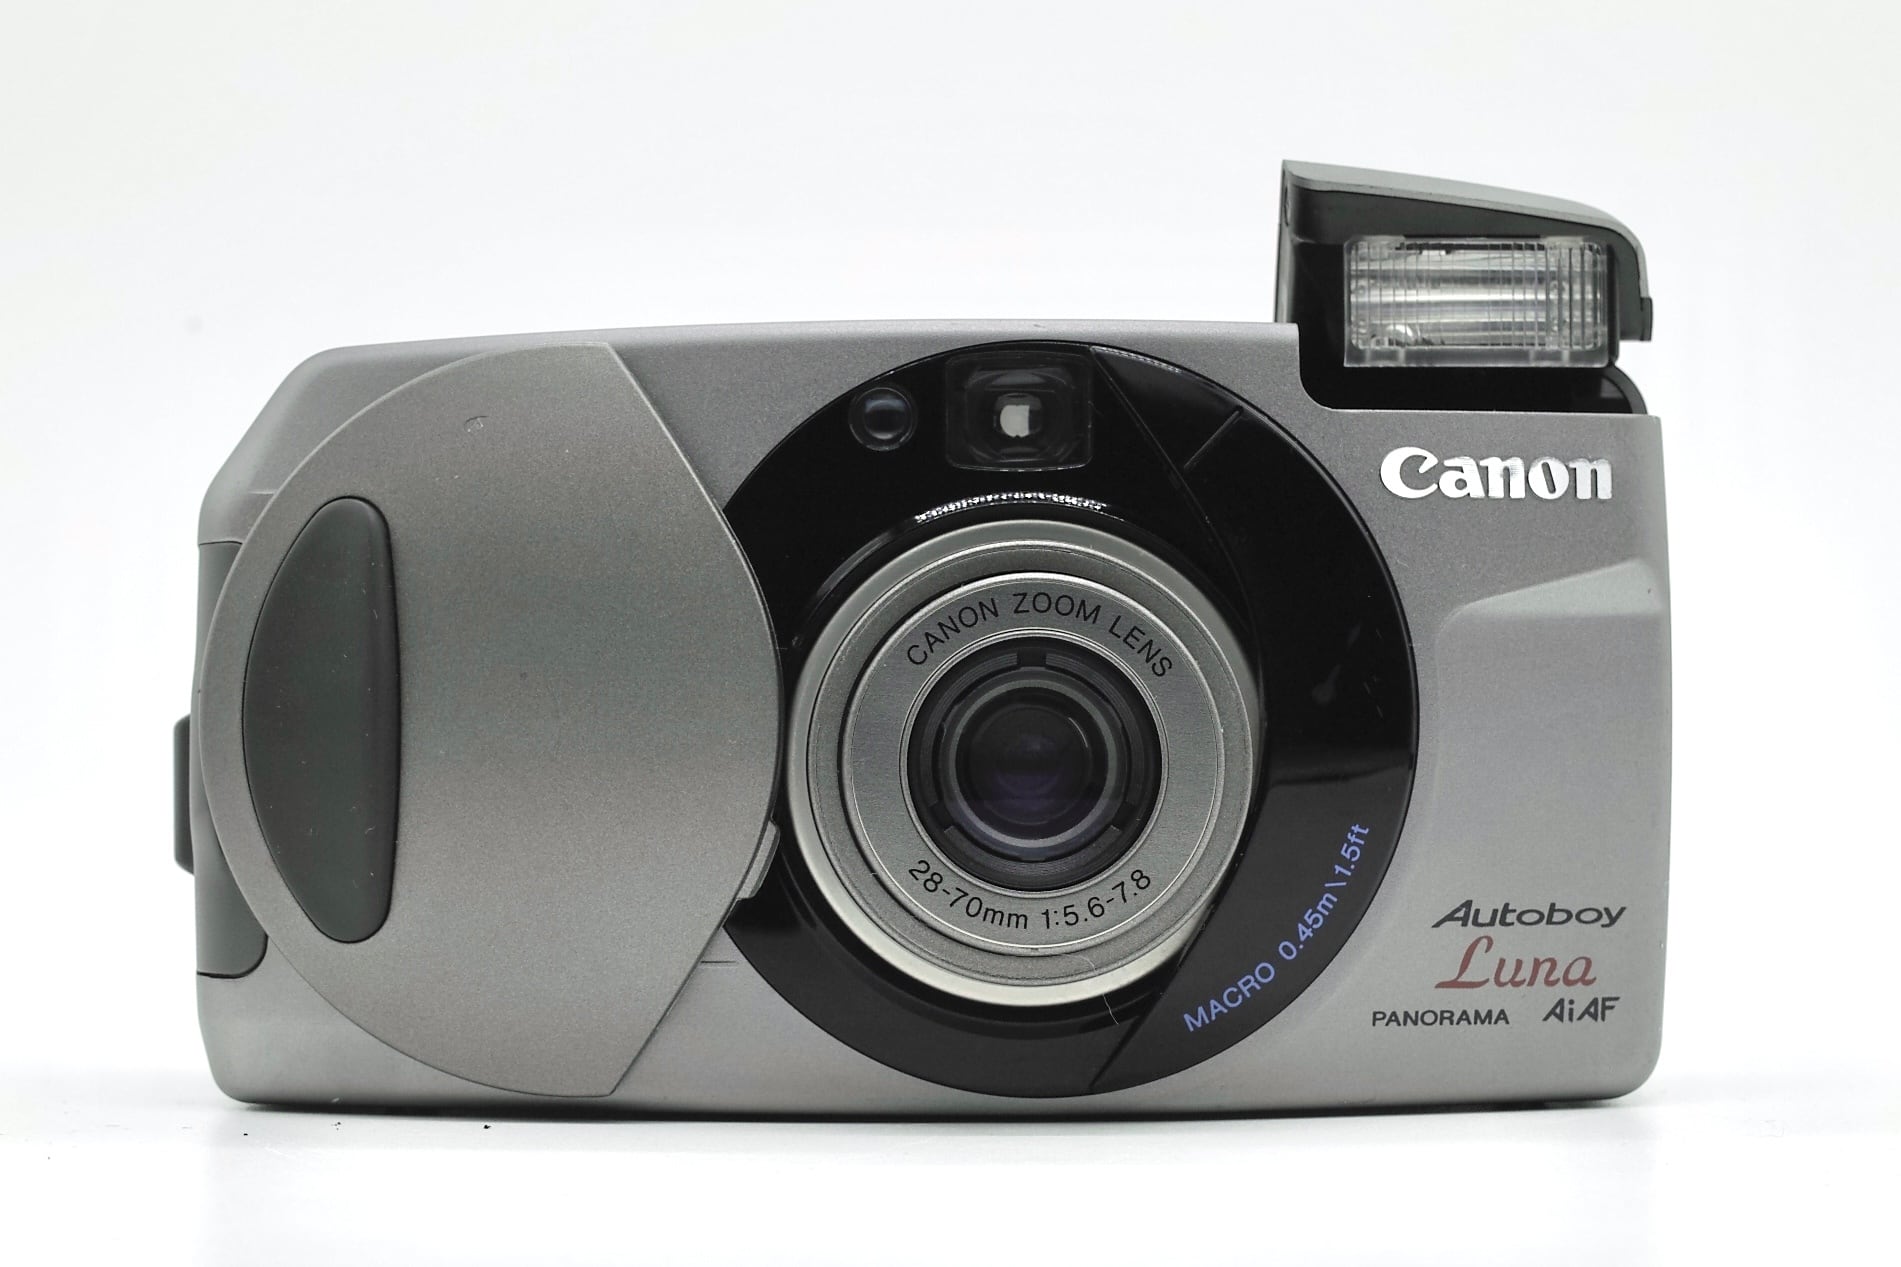 Canon Autoboy Luna | ヨアケマエカメラ